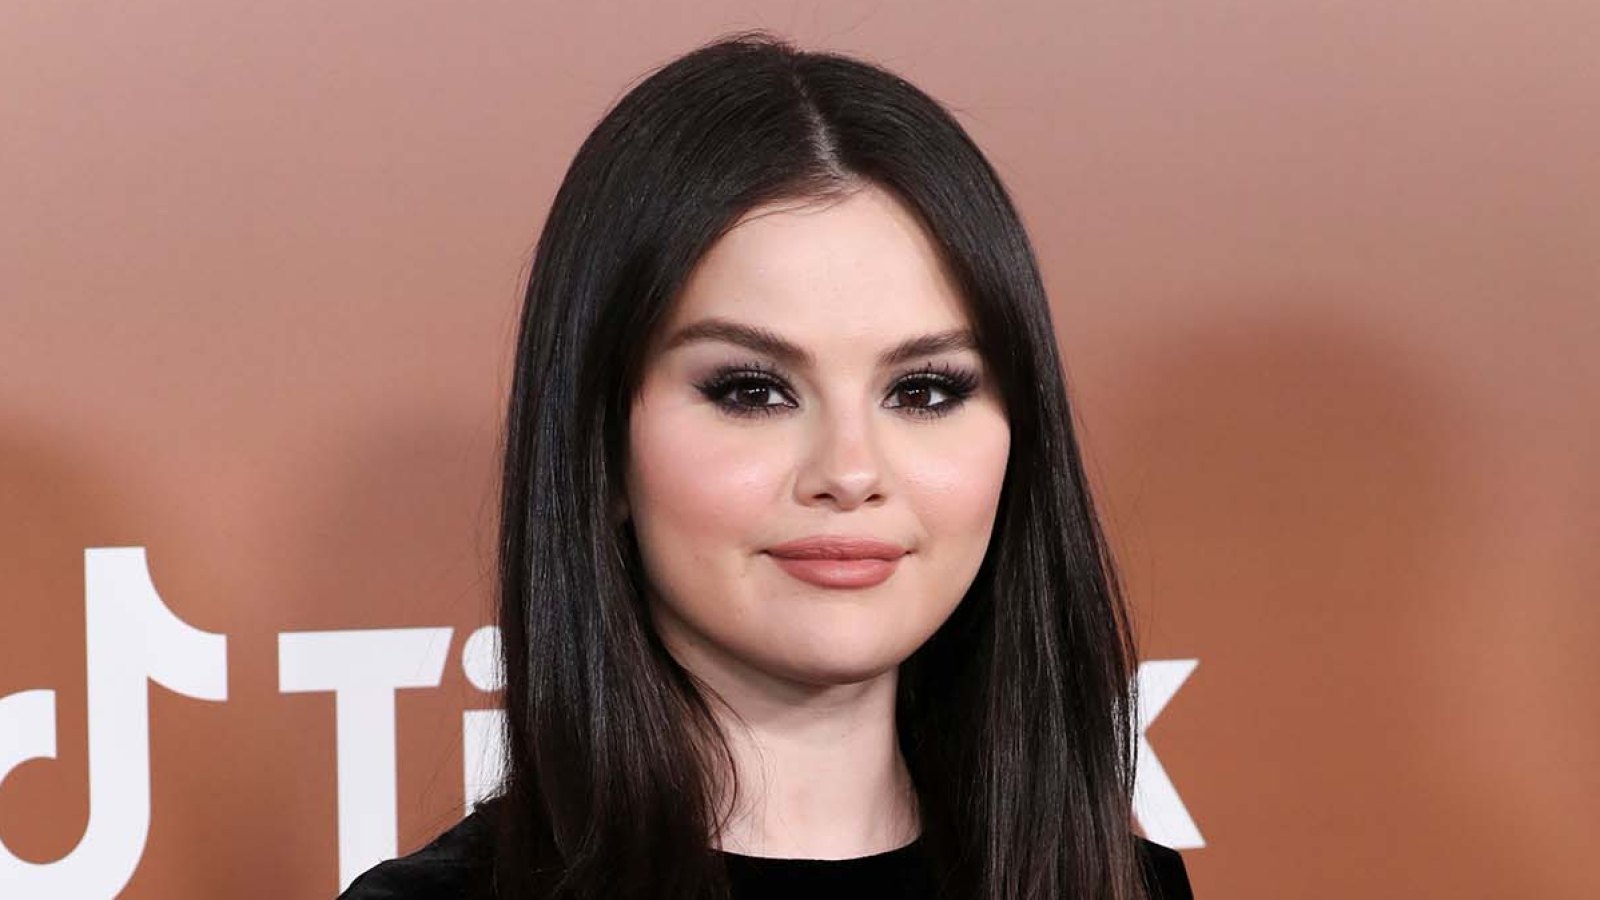 Selena Gomez's Lupus Medication Makes Her Hands Shake